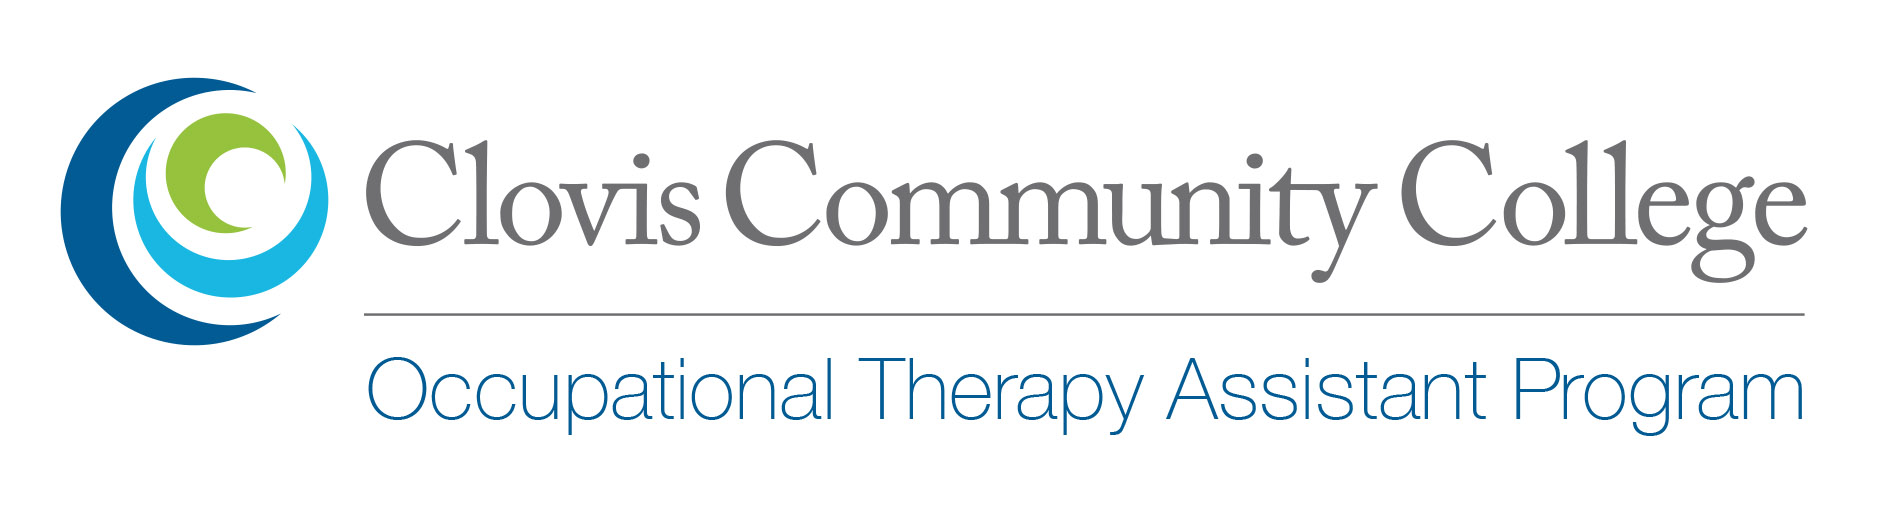 Clovis Community College Occupational Therapy Assitant Program